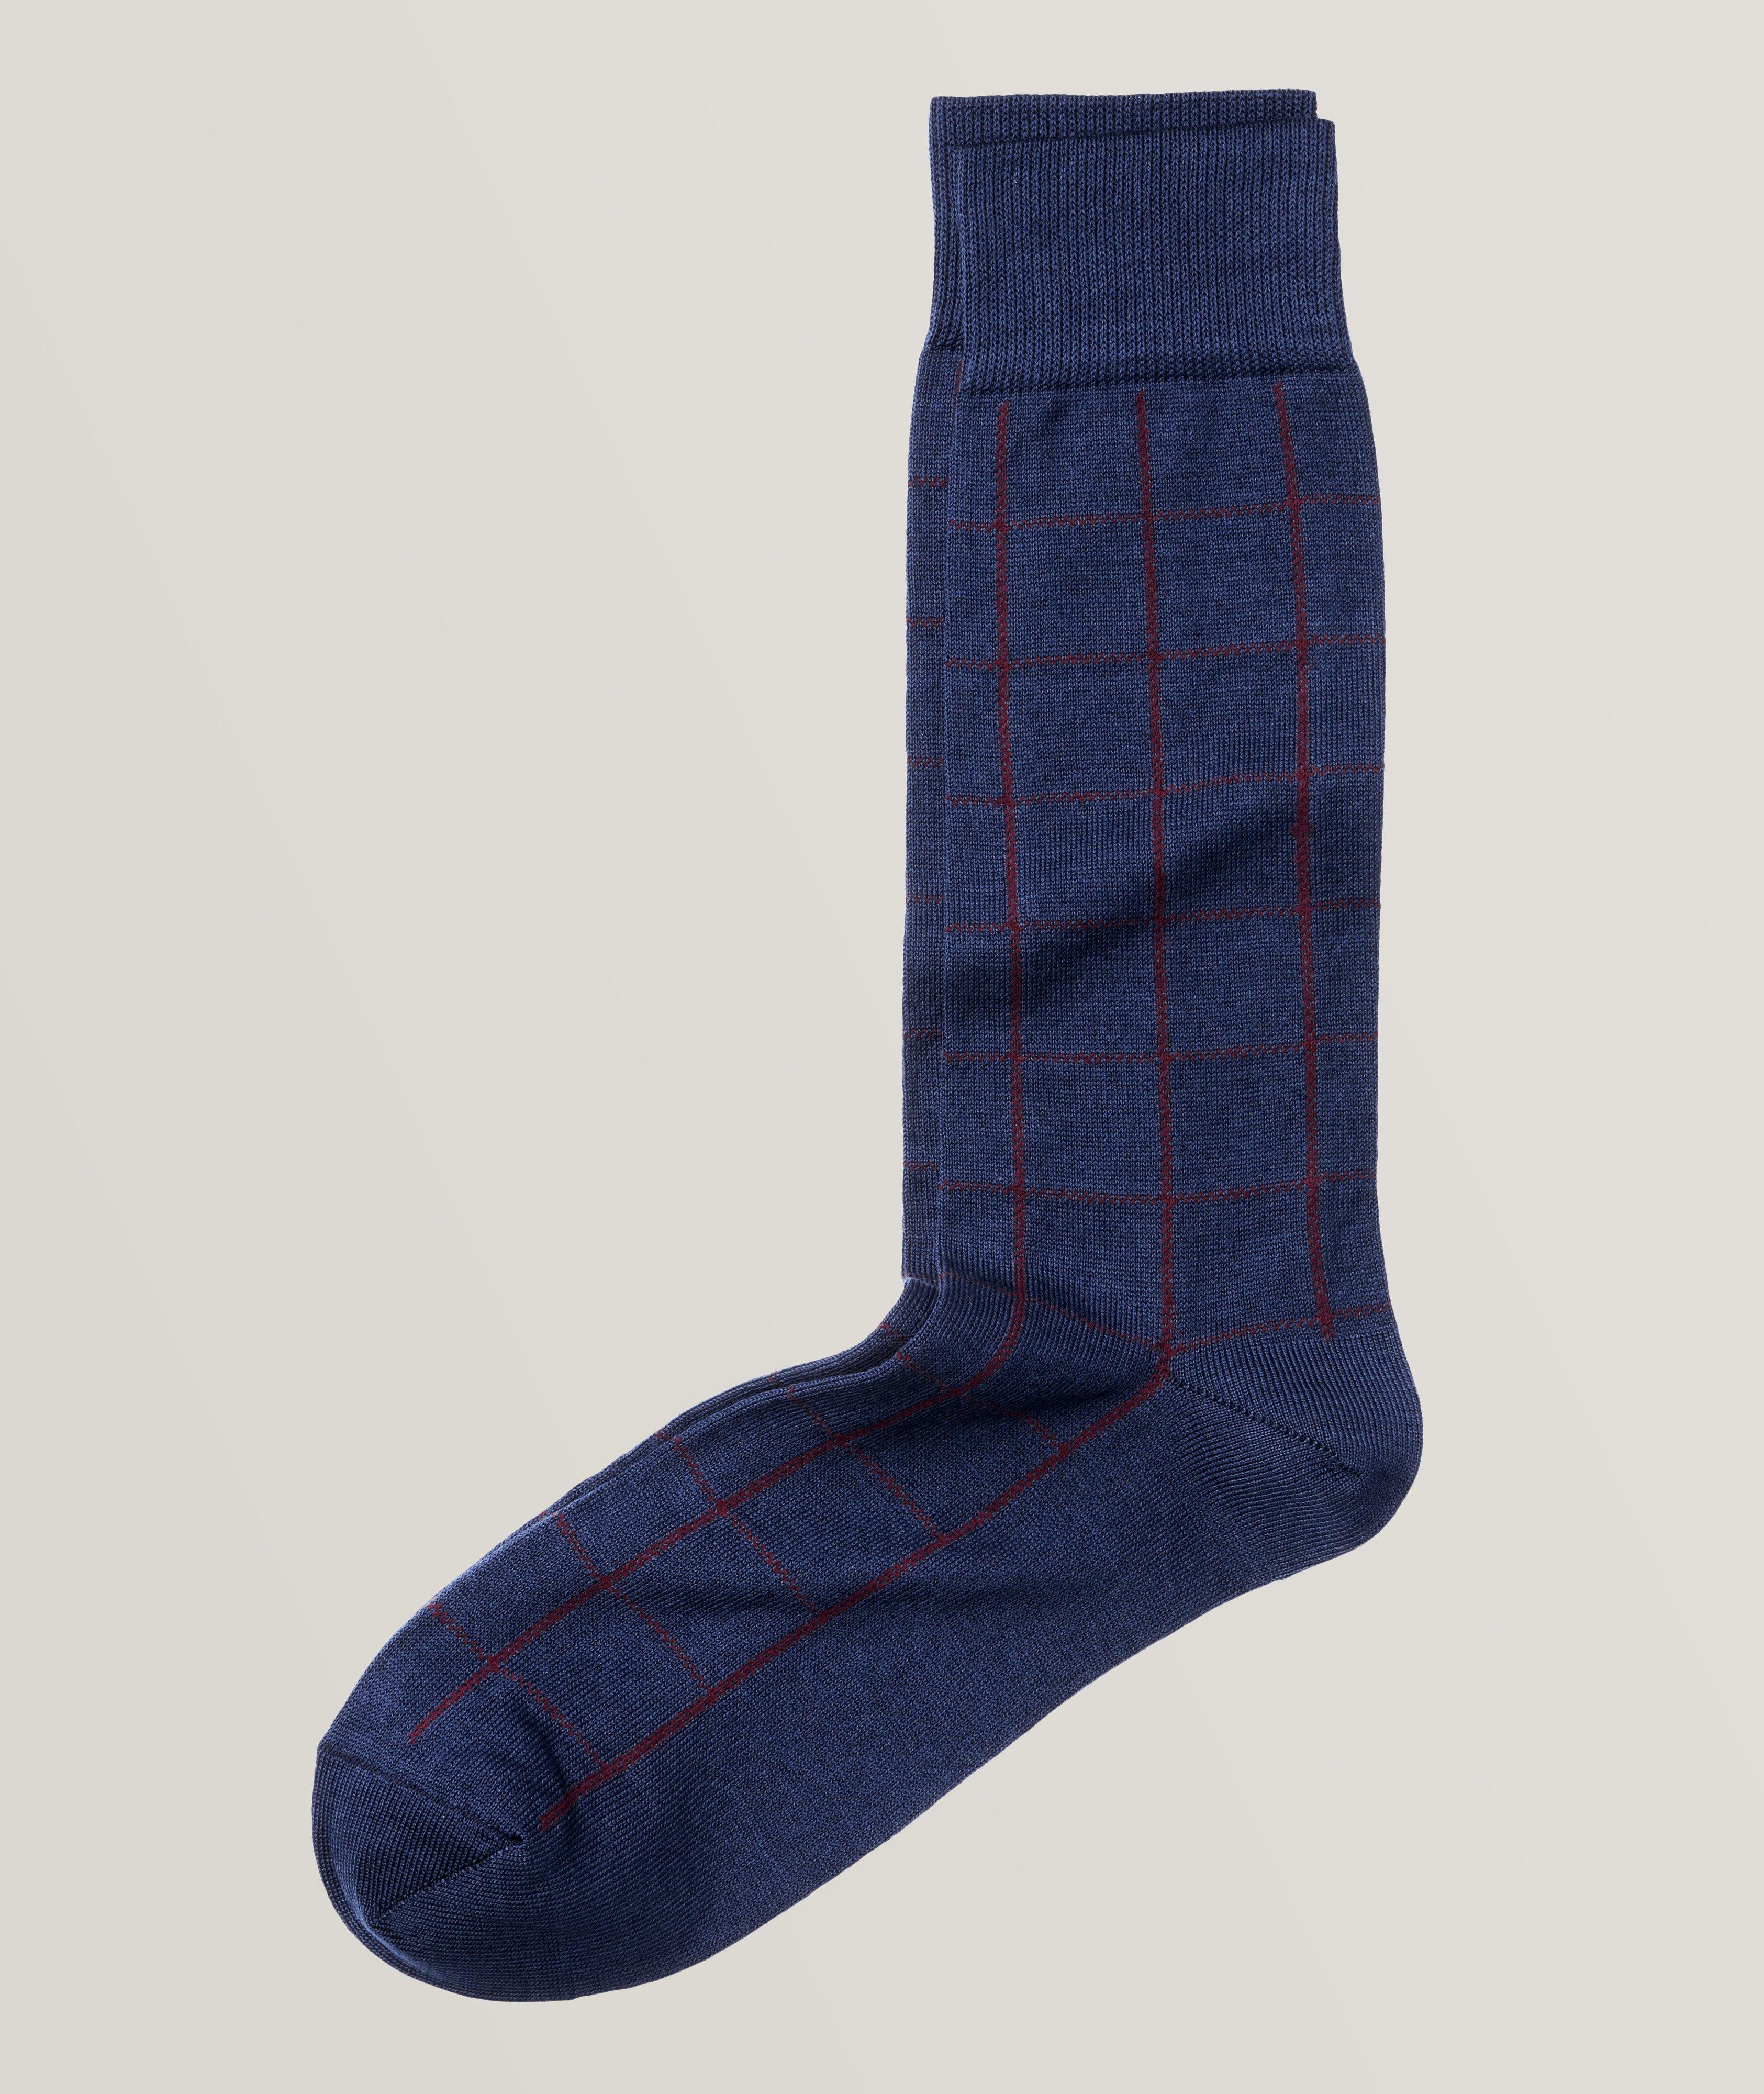 Windowpane Cotton-Blend Socks image 0